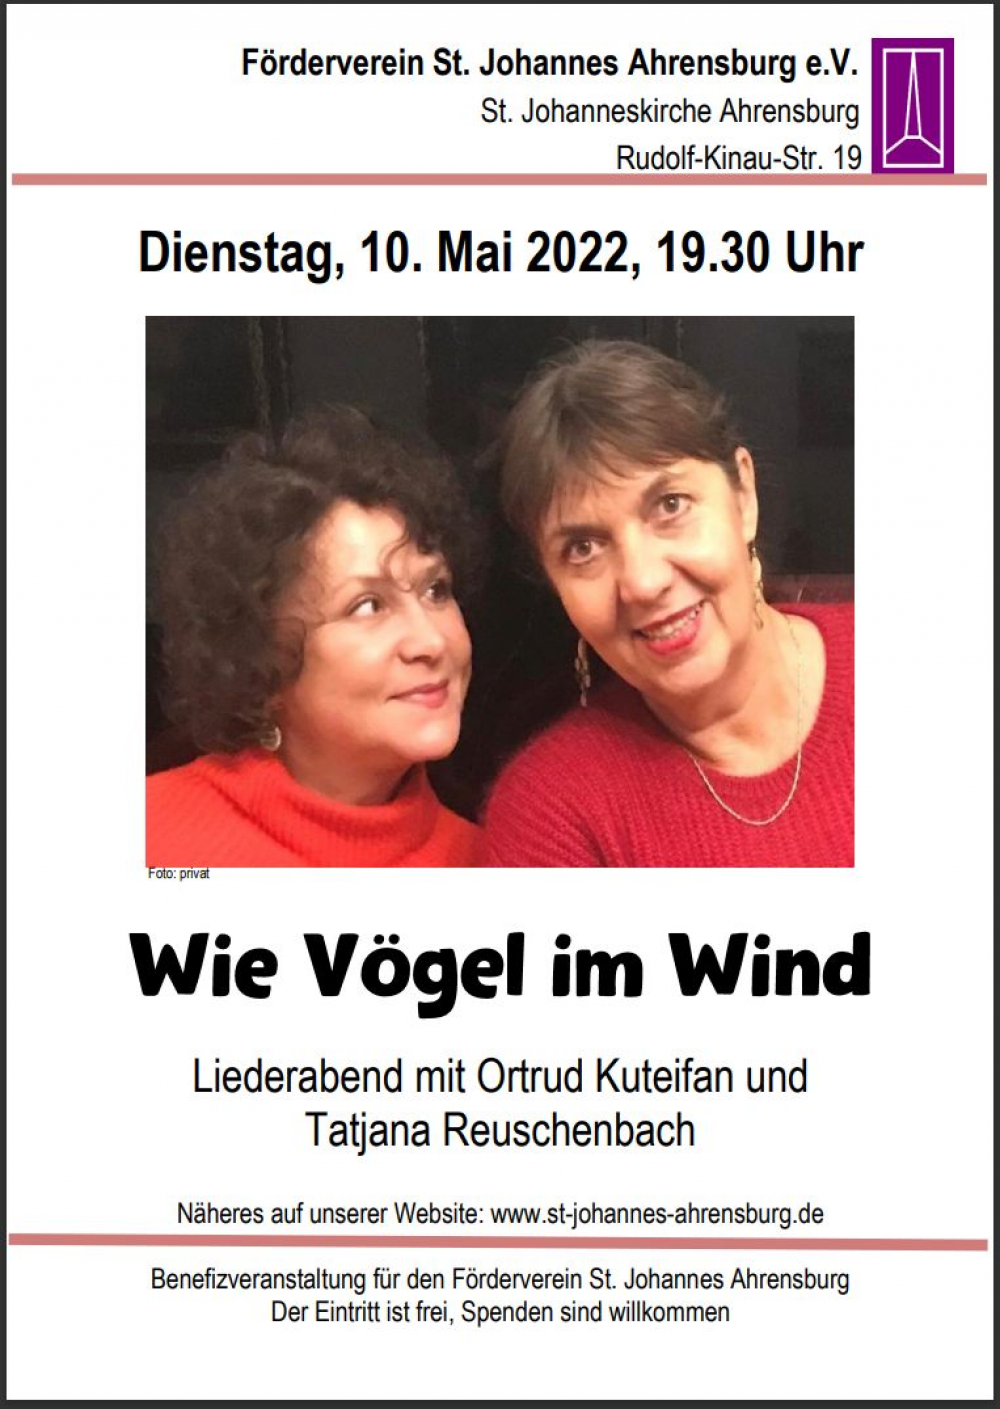 Wie Vögel im Wind - Liederabend am 10. Mai 2022